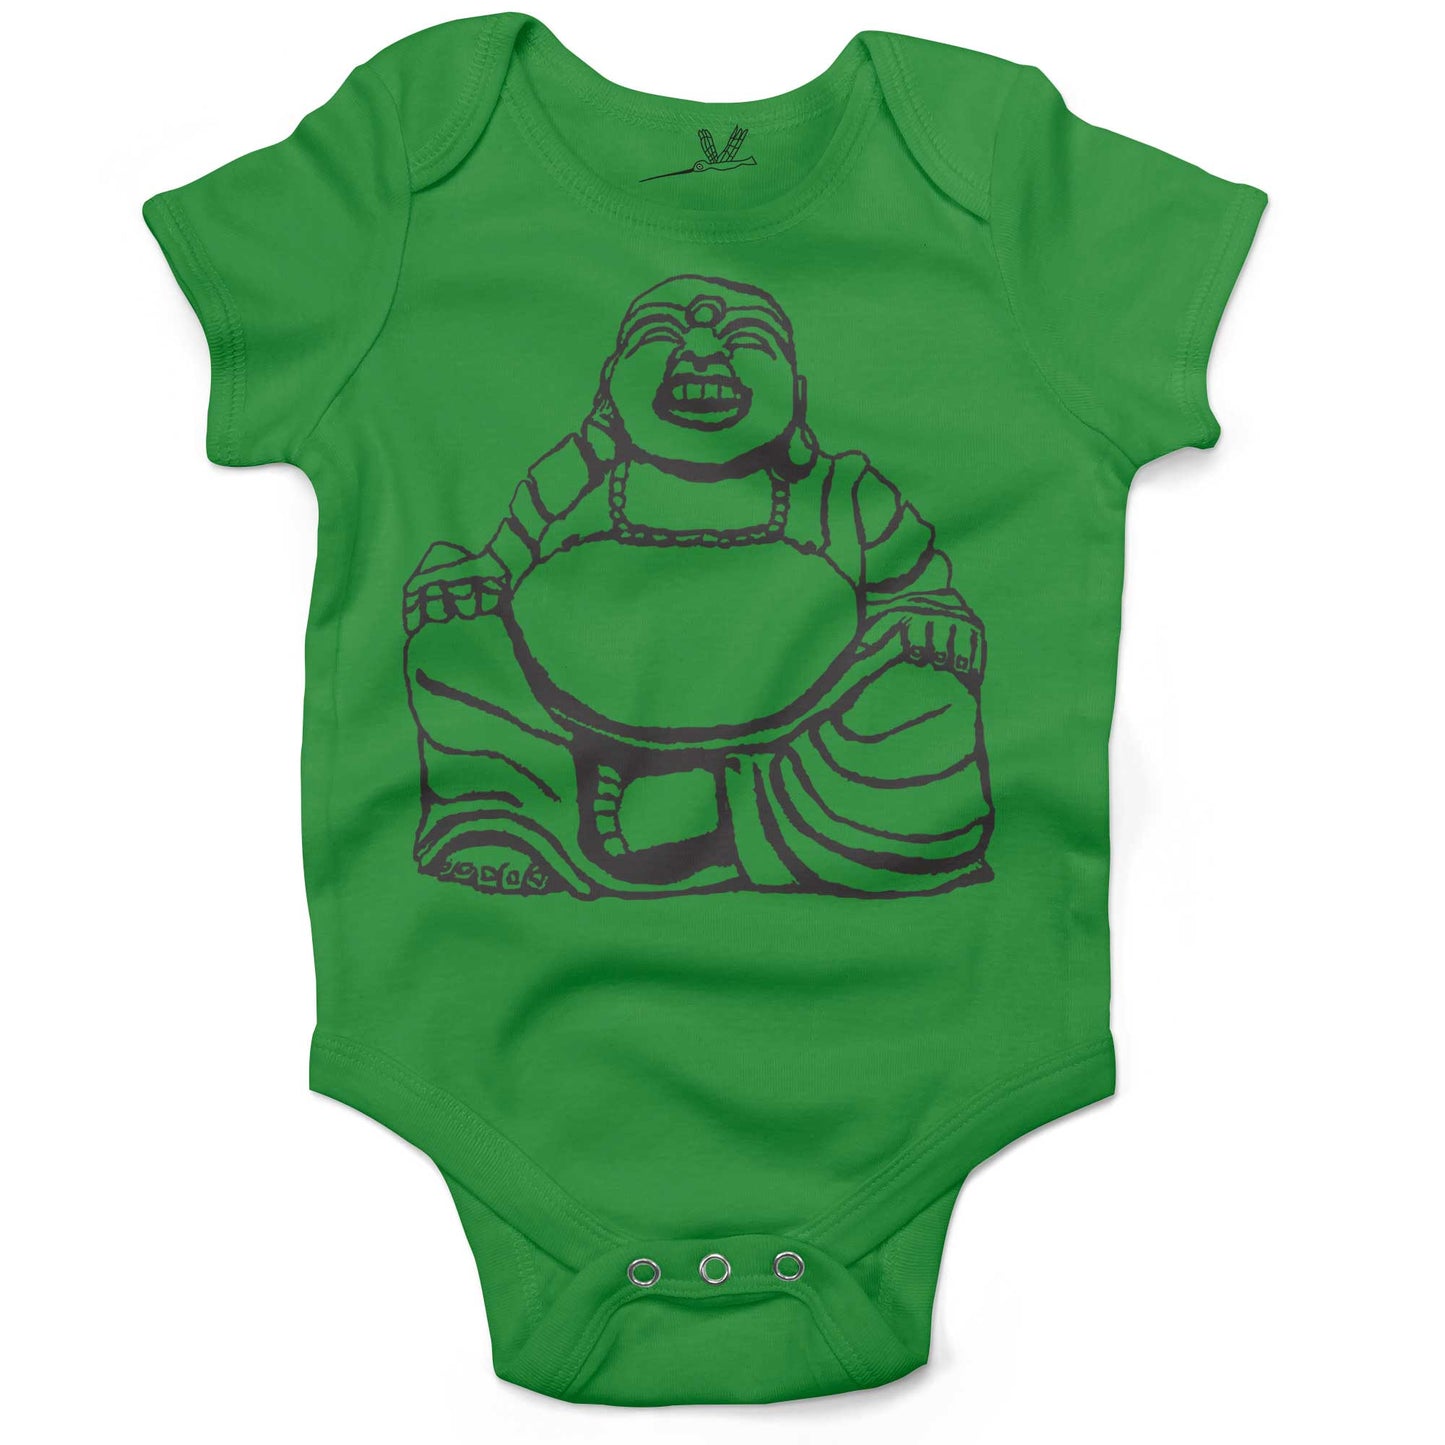 Laughing Buddha Infant Bodysuit or Raglan Baby Tee-Grass Green-3-6 months